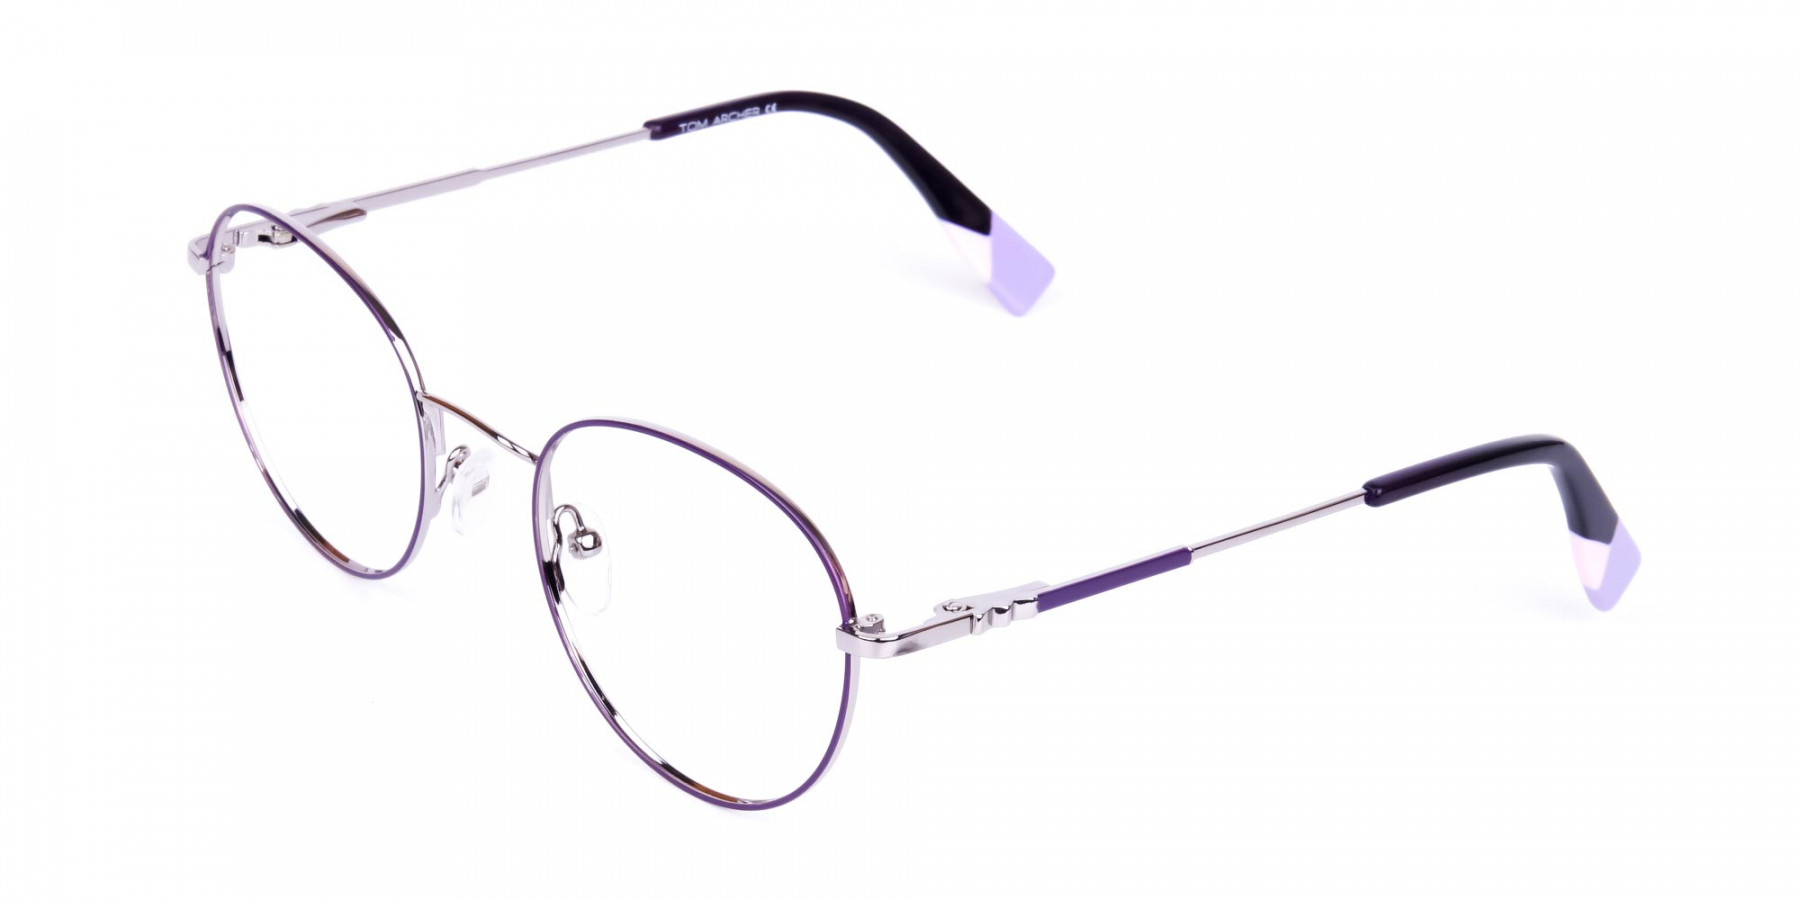 Stylish-Dark-Purple-and-Silver-Round-Glasses-1